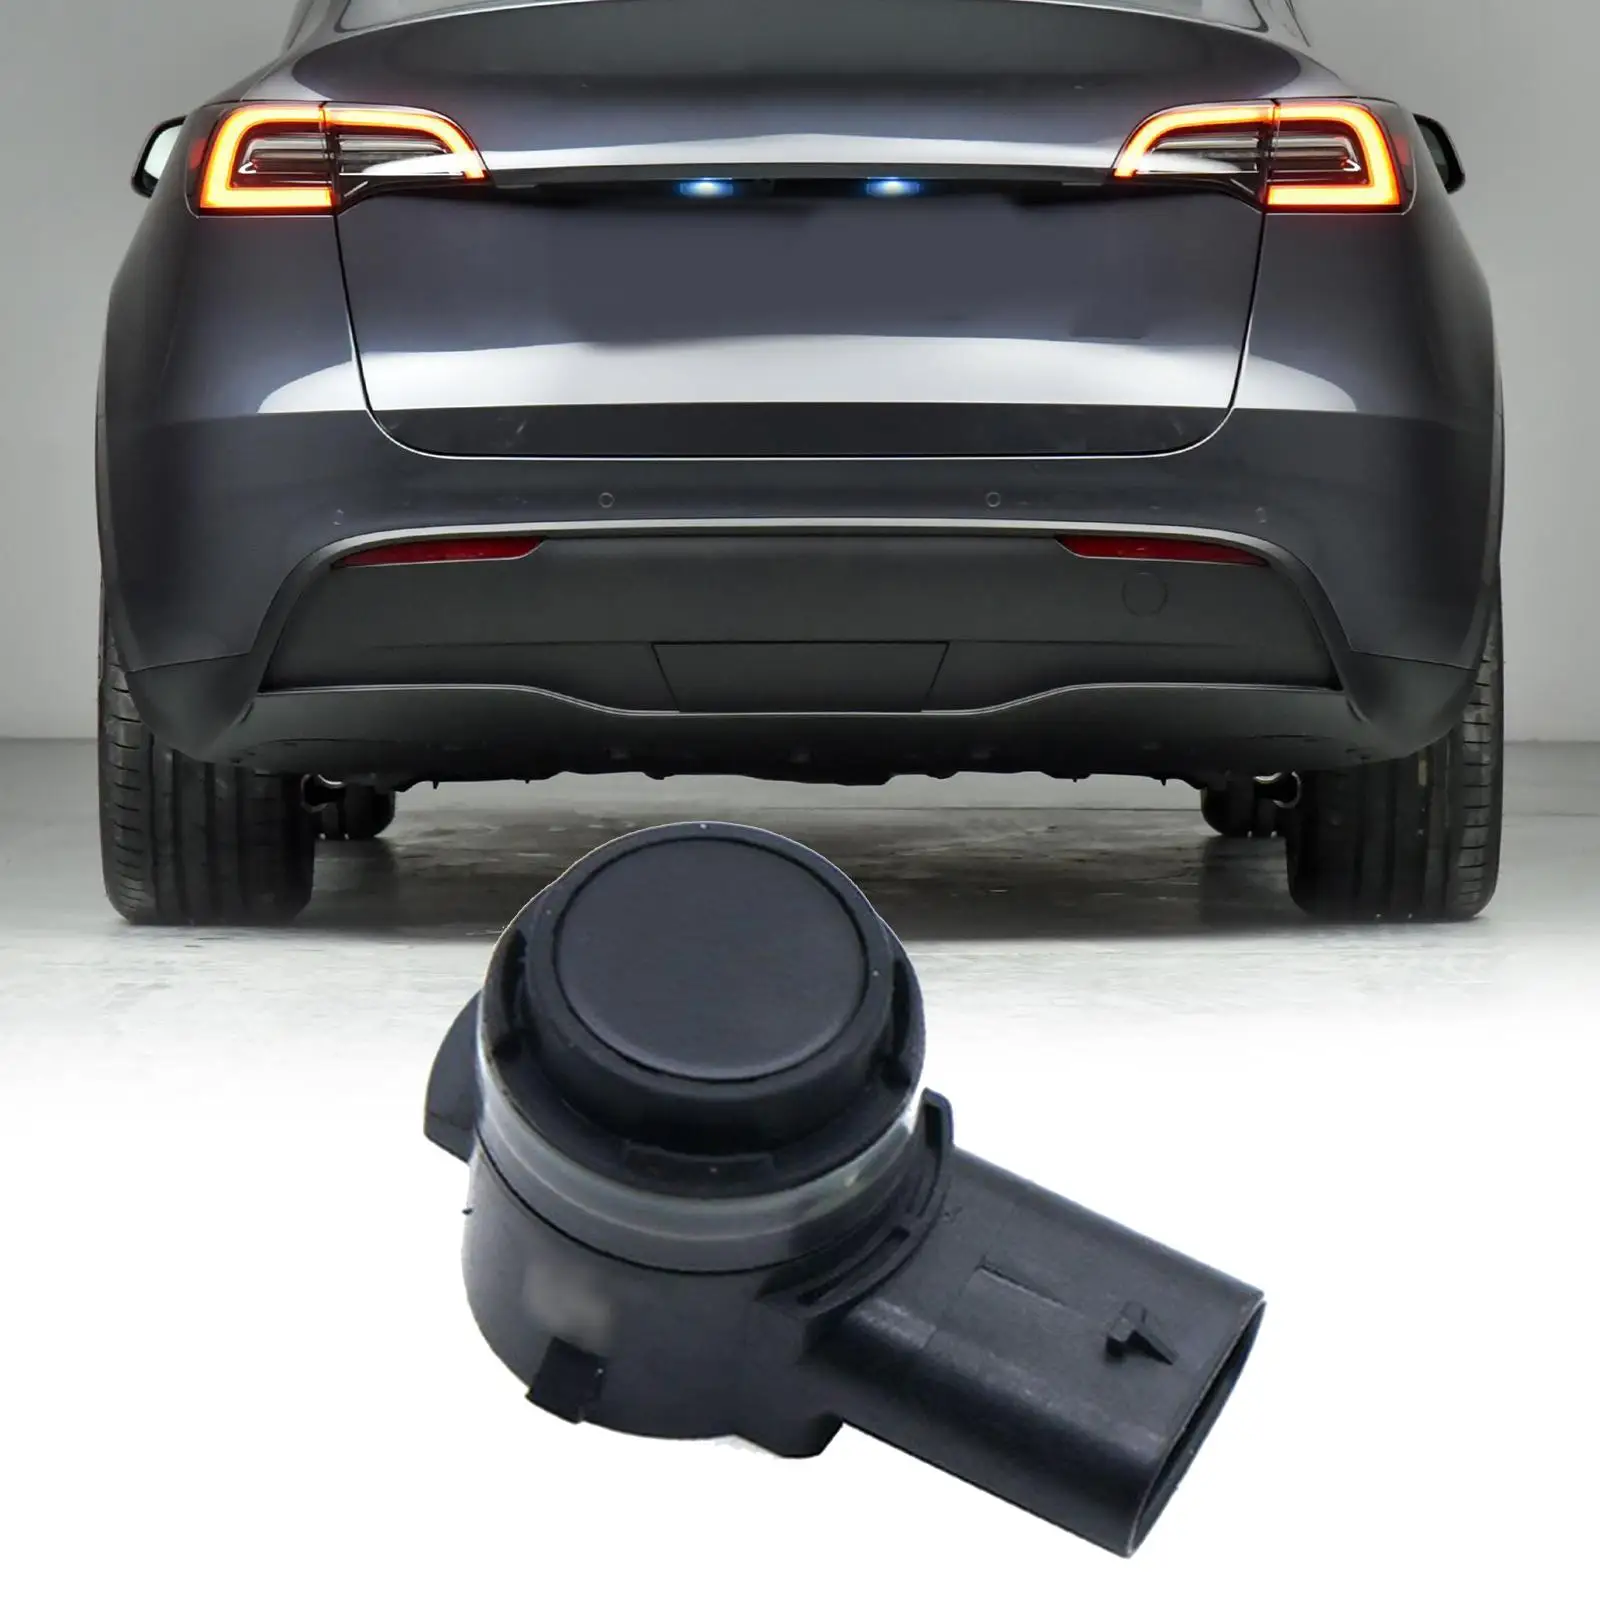 Reverse Backup Parking Sensor 1127503-12-b 1127503-12-c for Tesla Model x S 3 2017-2019 Automobile Repairing Accessory